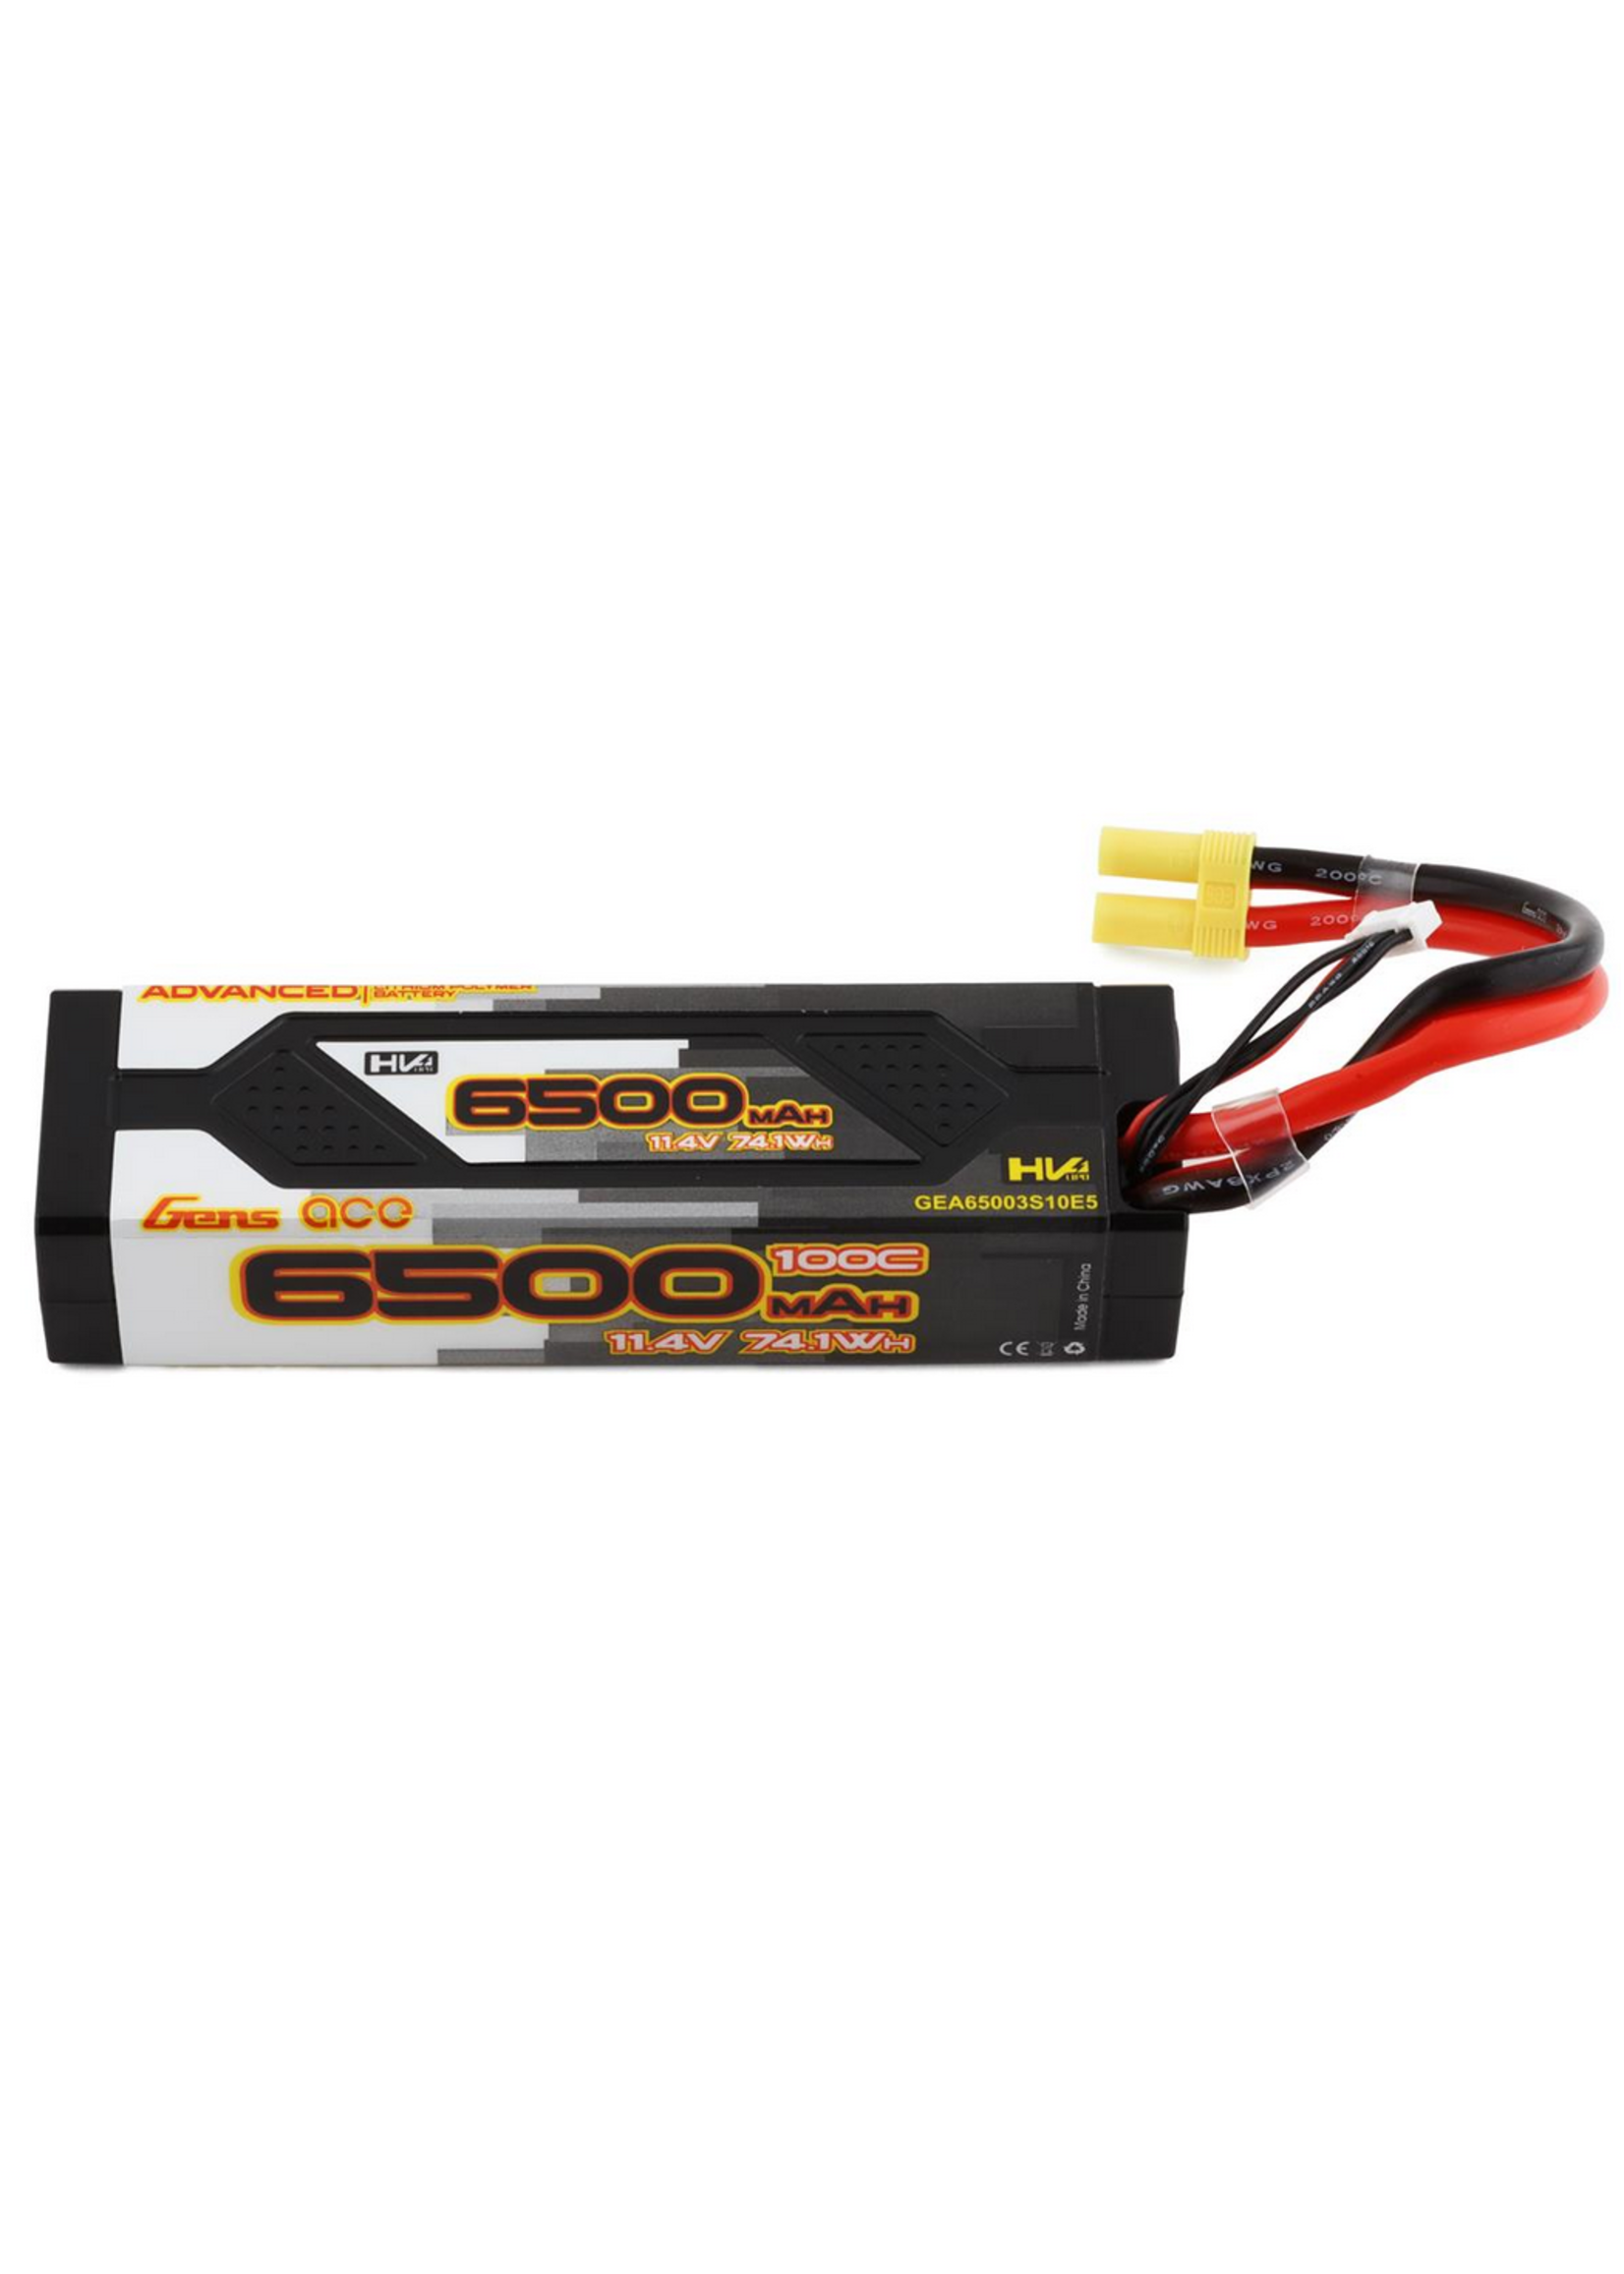 GensAce/Tattu GEA65003S10E5 Gens ace Advanced 6500mAh 11.4V 100C 3S1P HardCase Lipo Battery Pack 60# with EC5 Plug